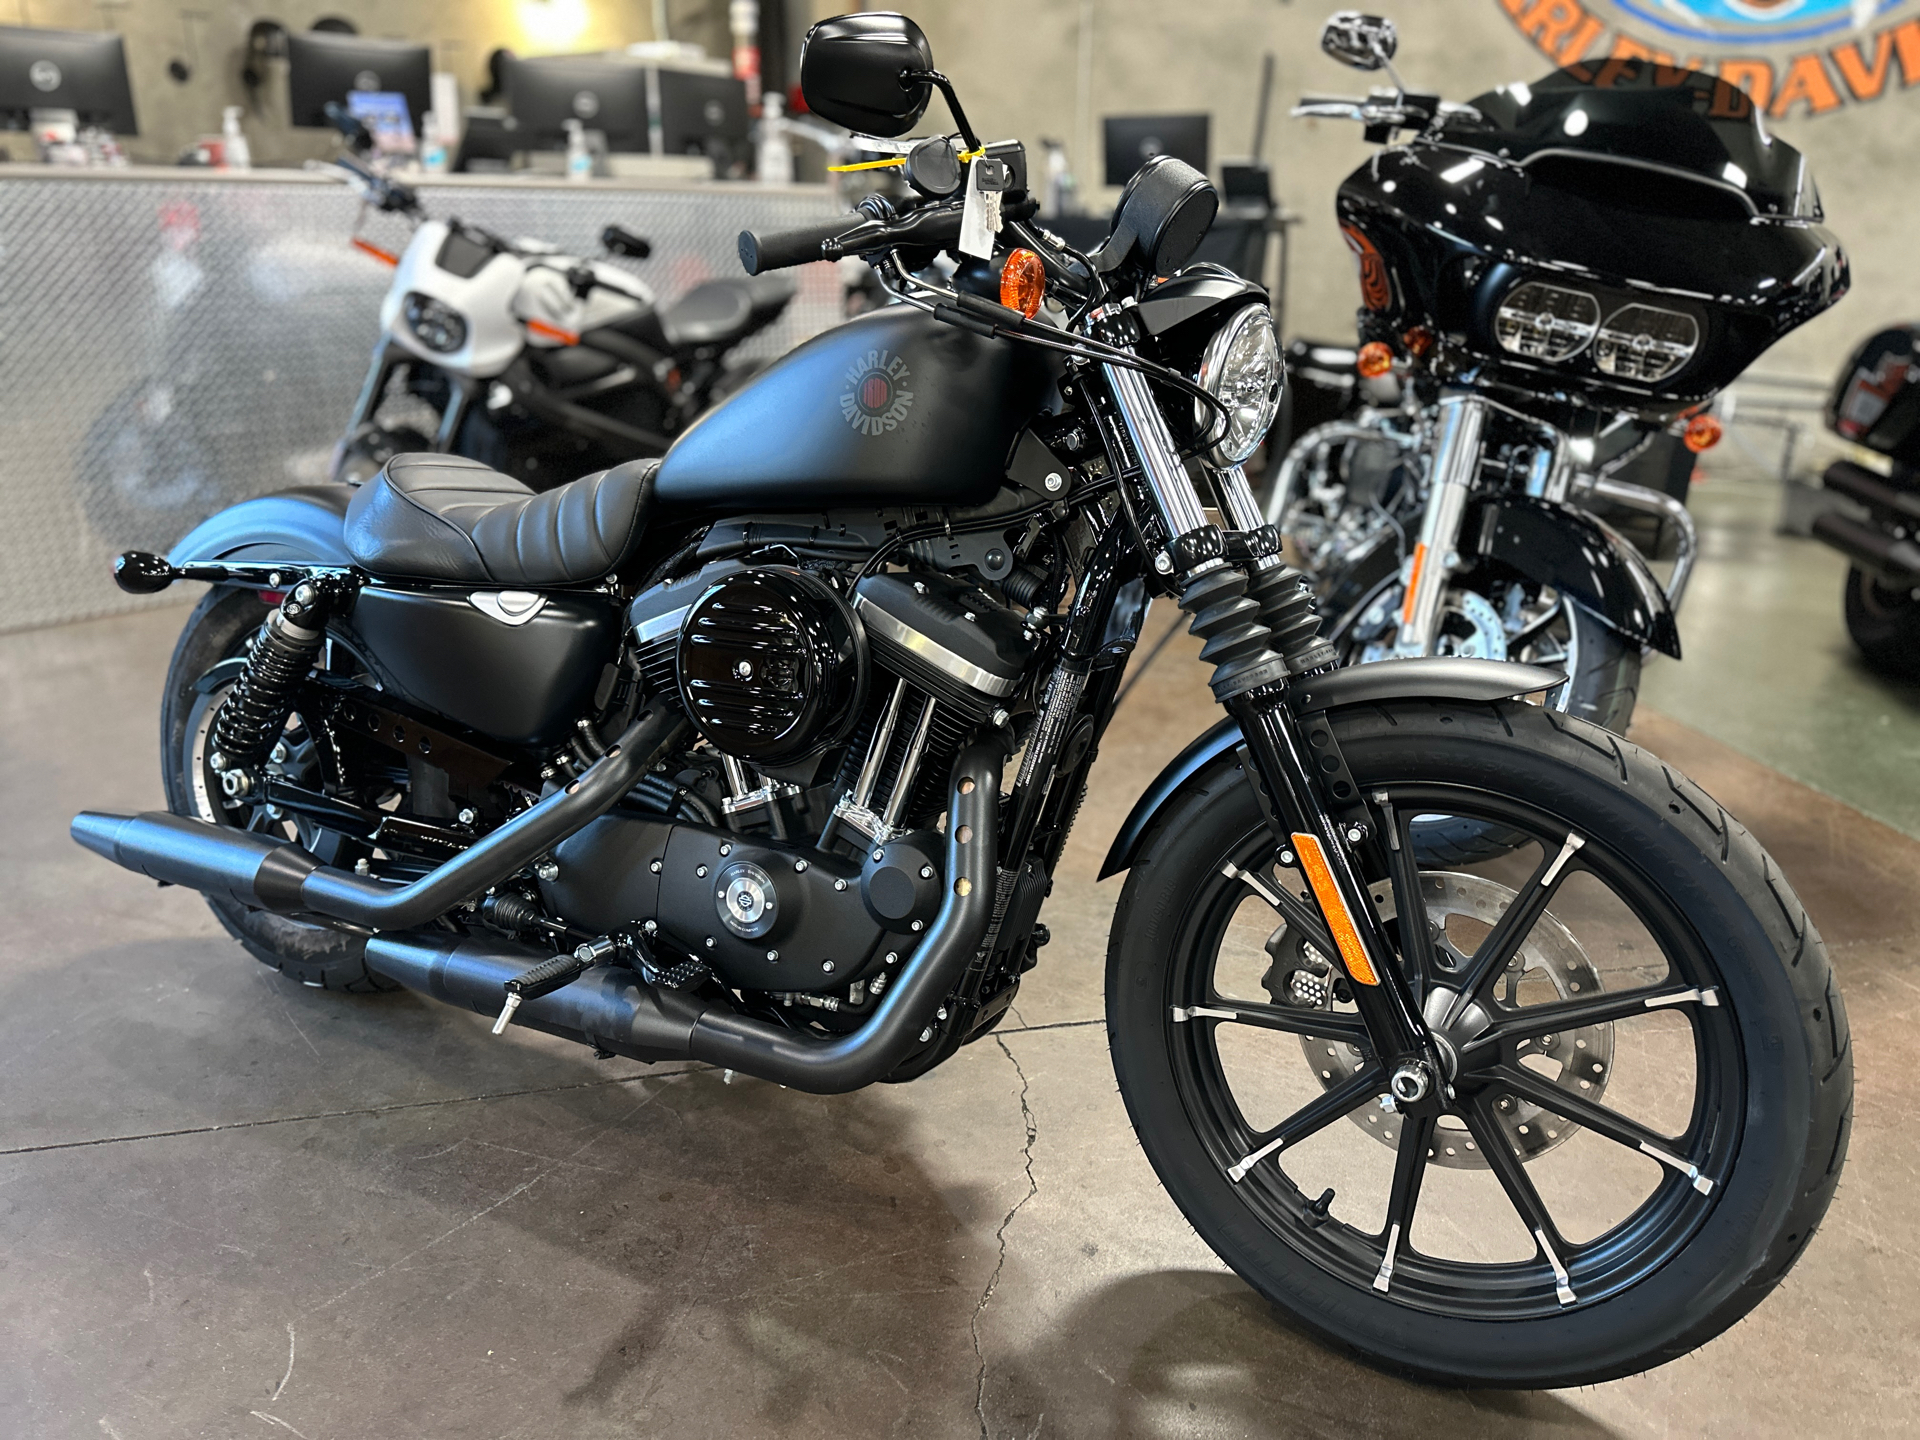 2022 Harley-Davidson Iron 883™ in San Jose, California - Photo 3